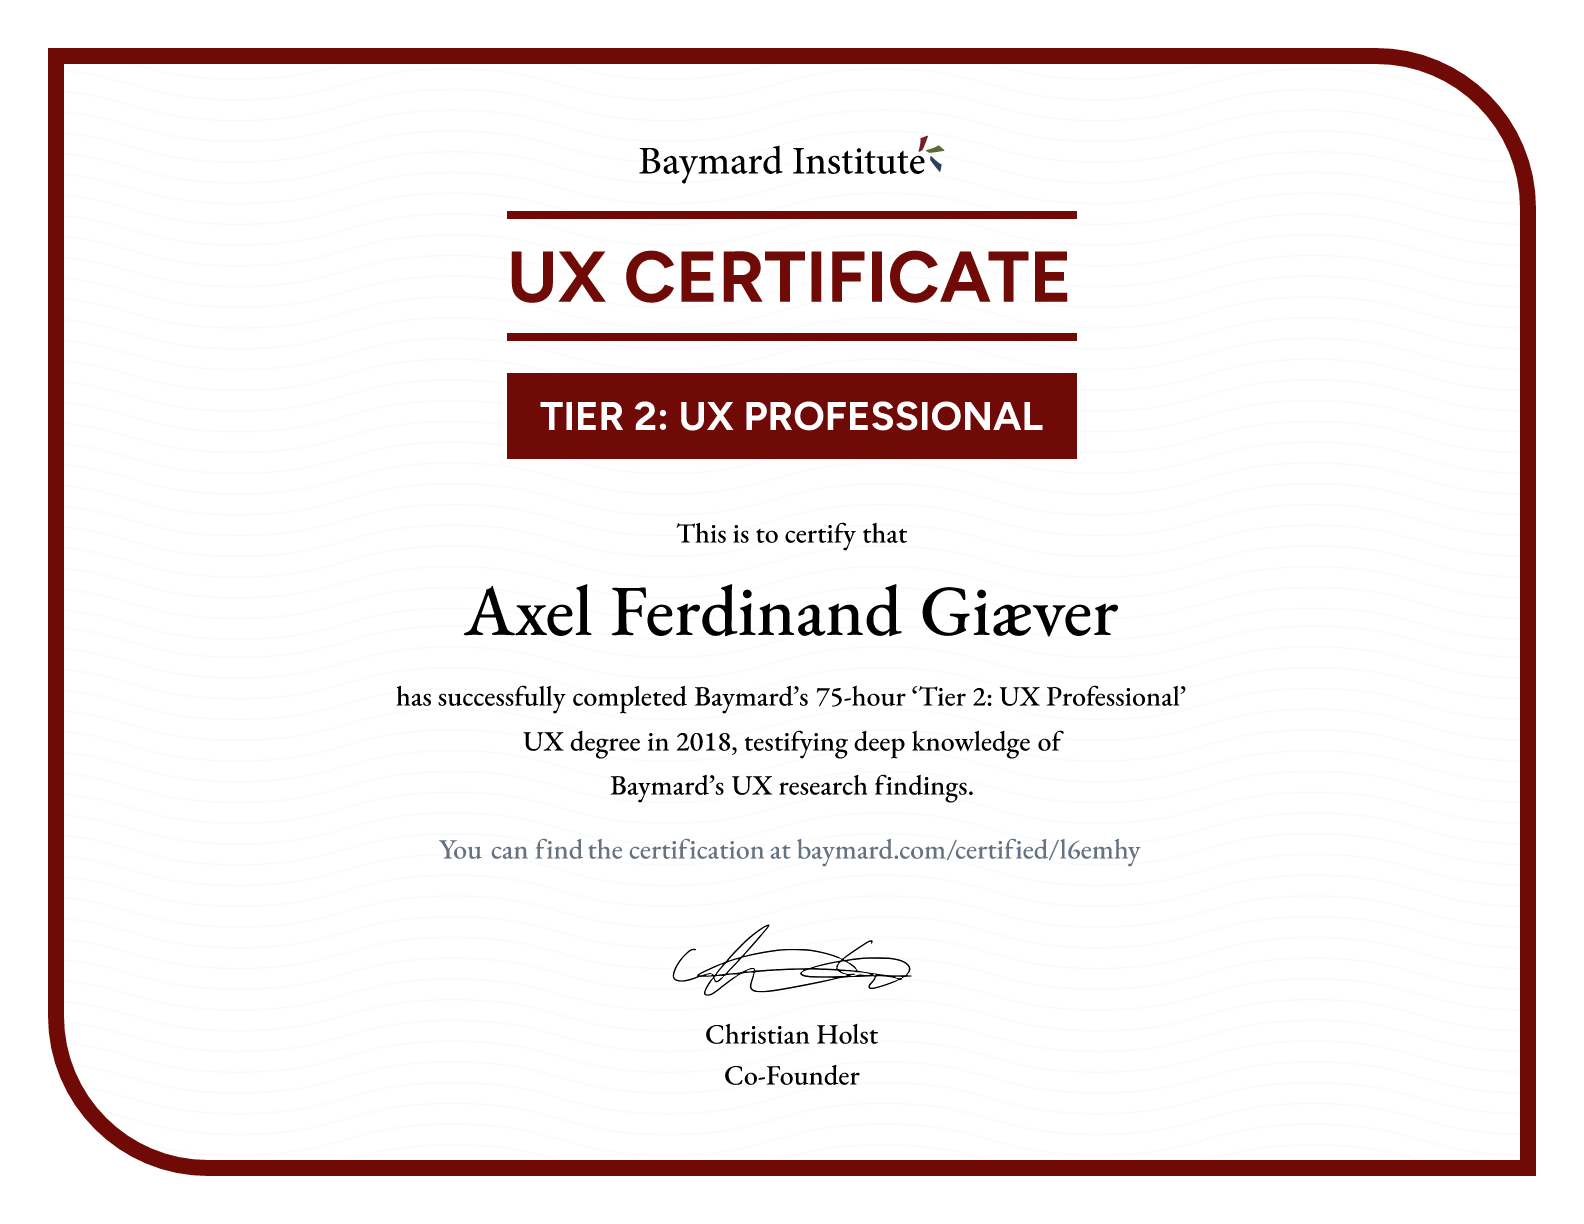 Axel Ferdinand Giæver’s certificate